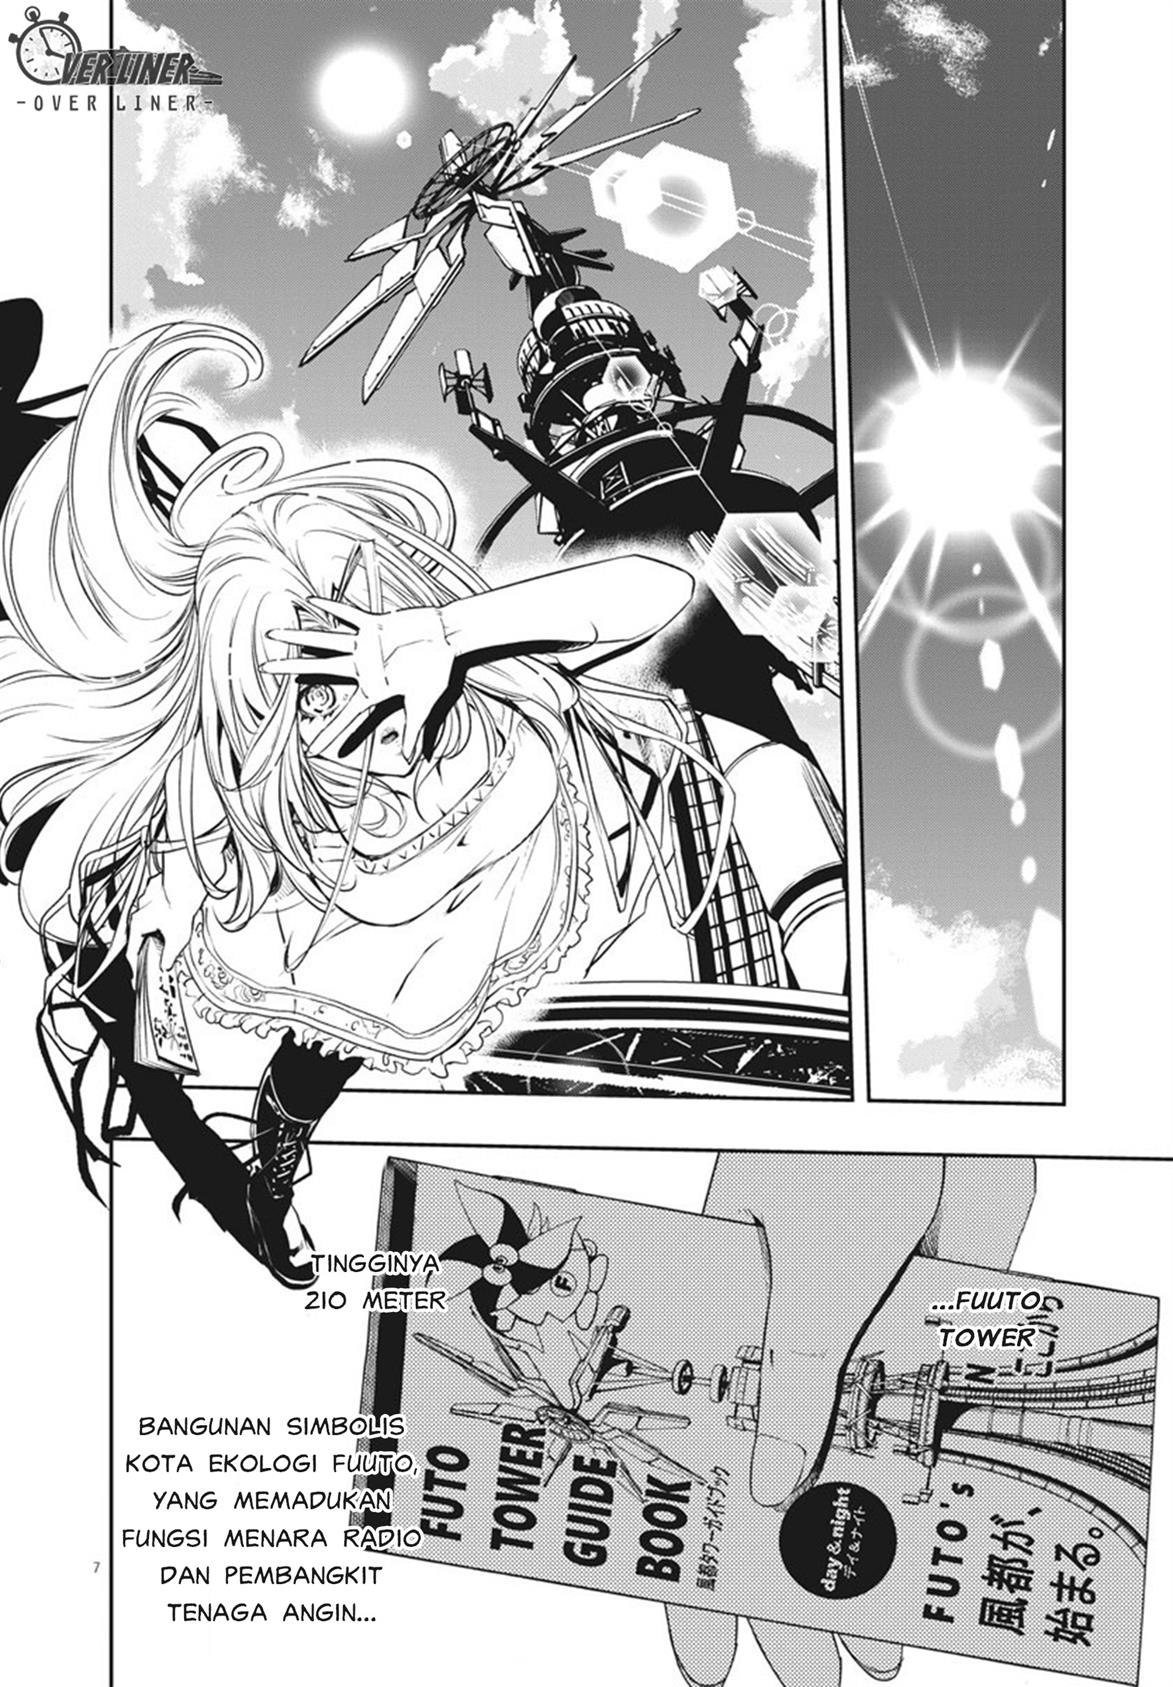 Kamen Rider W: Fuuto Tantei Chapter 75